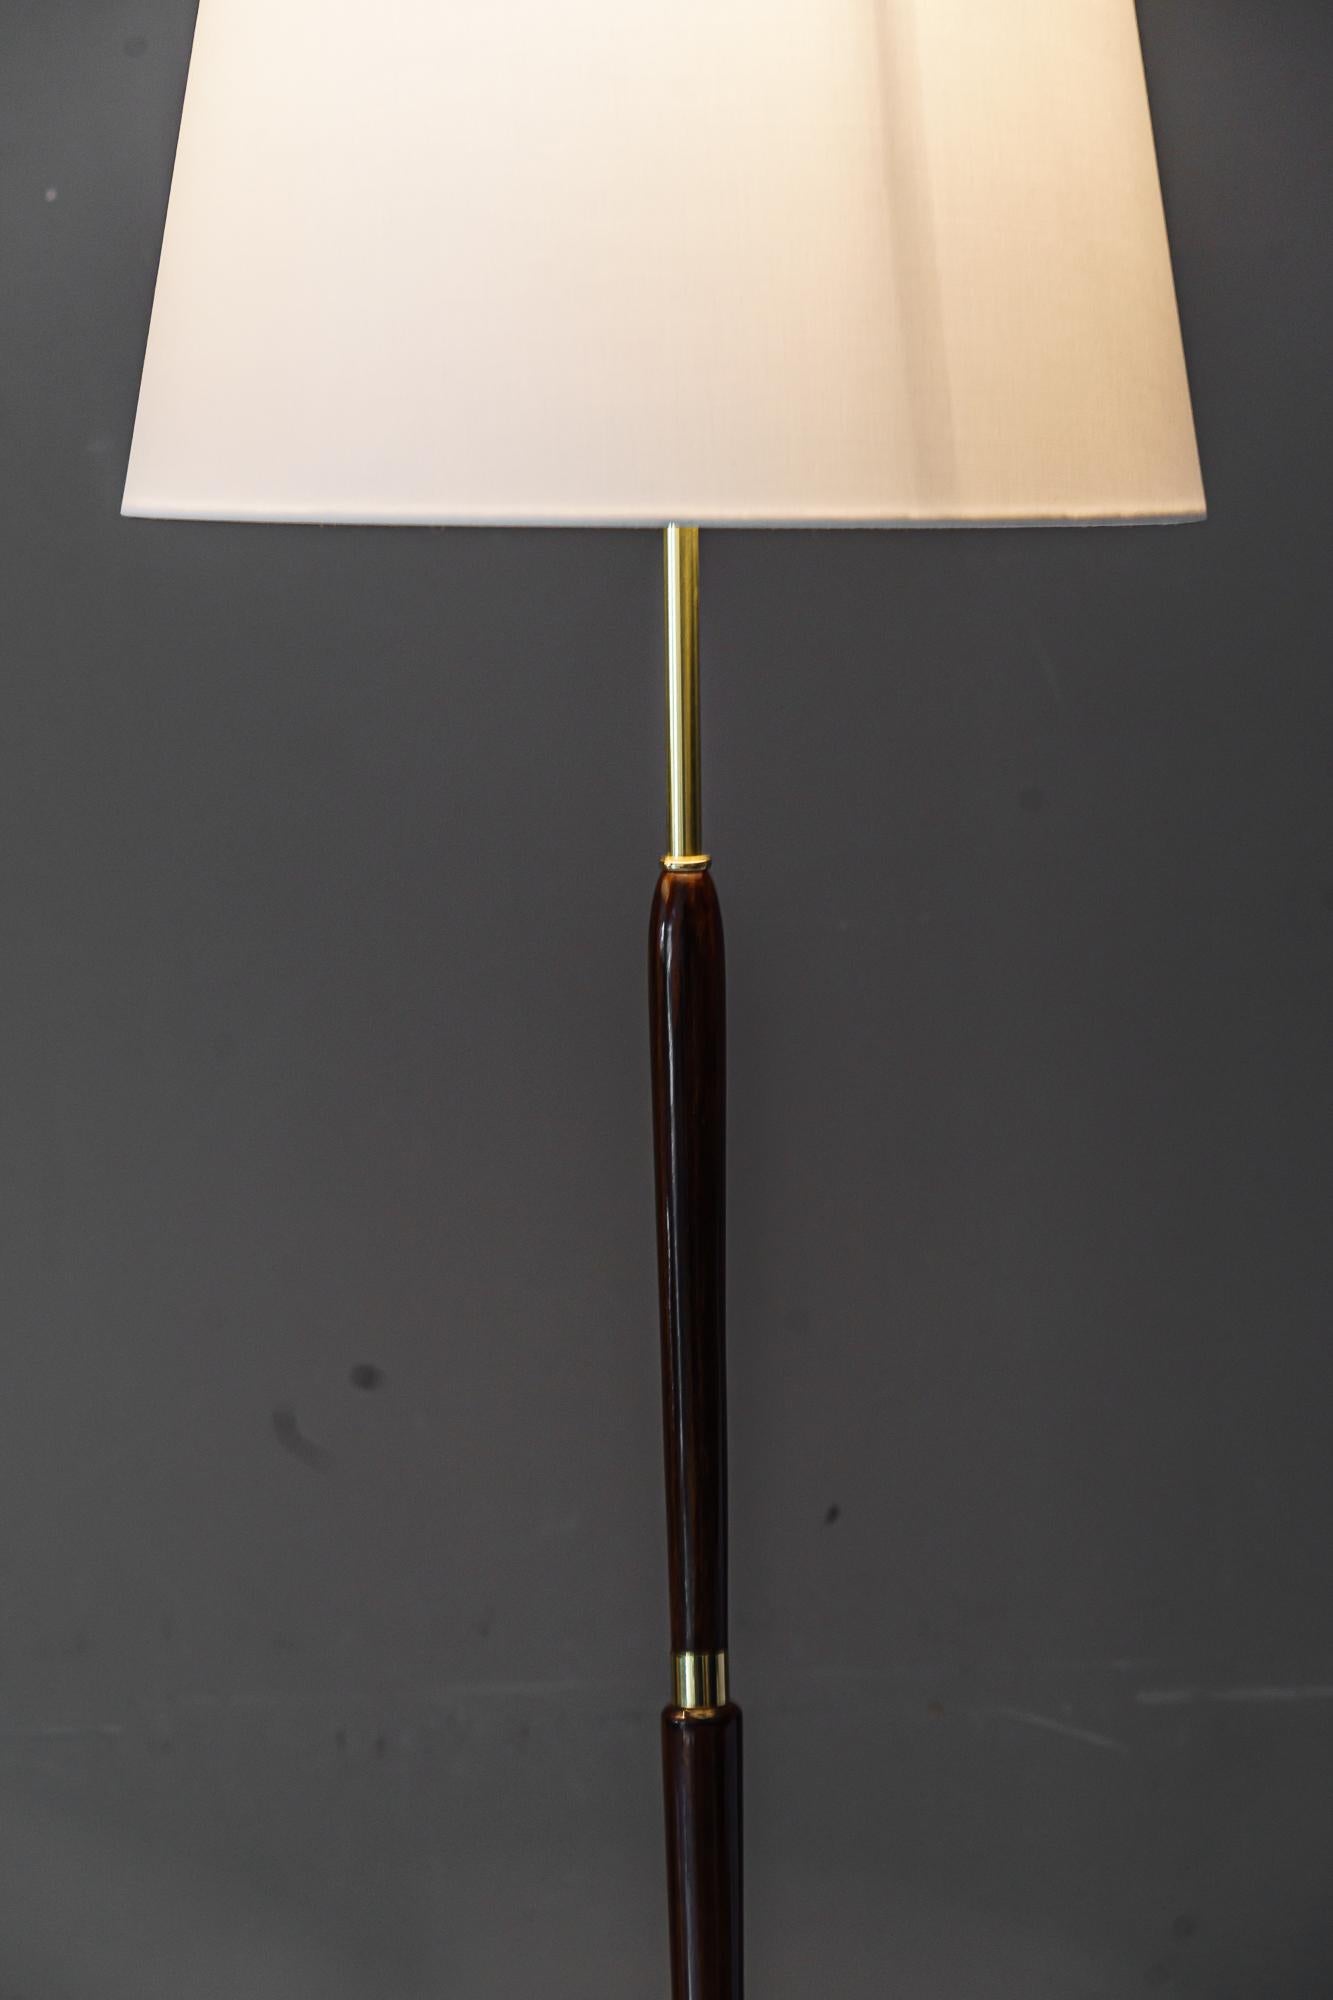 2 Rupert Nikoll Floor Lamps 'Almost Same' Vienna Around 1960 For Sale 3